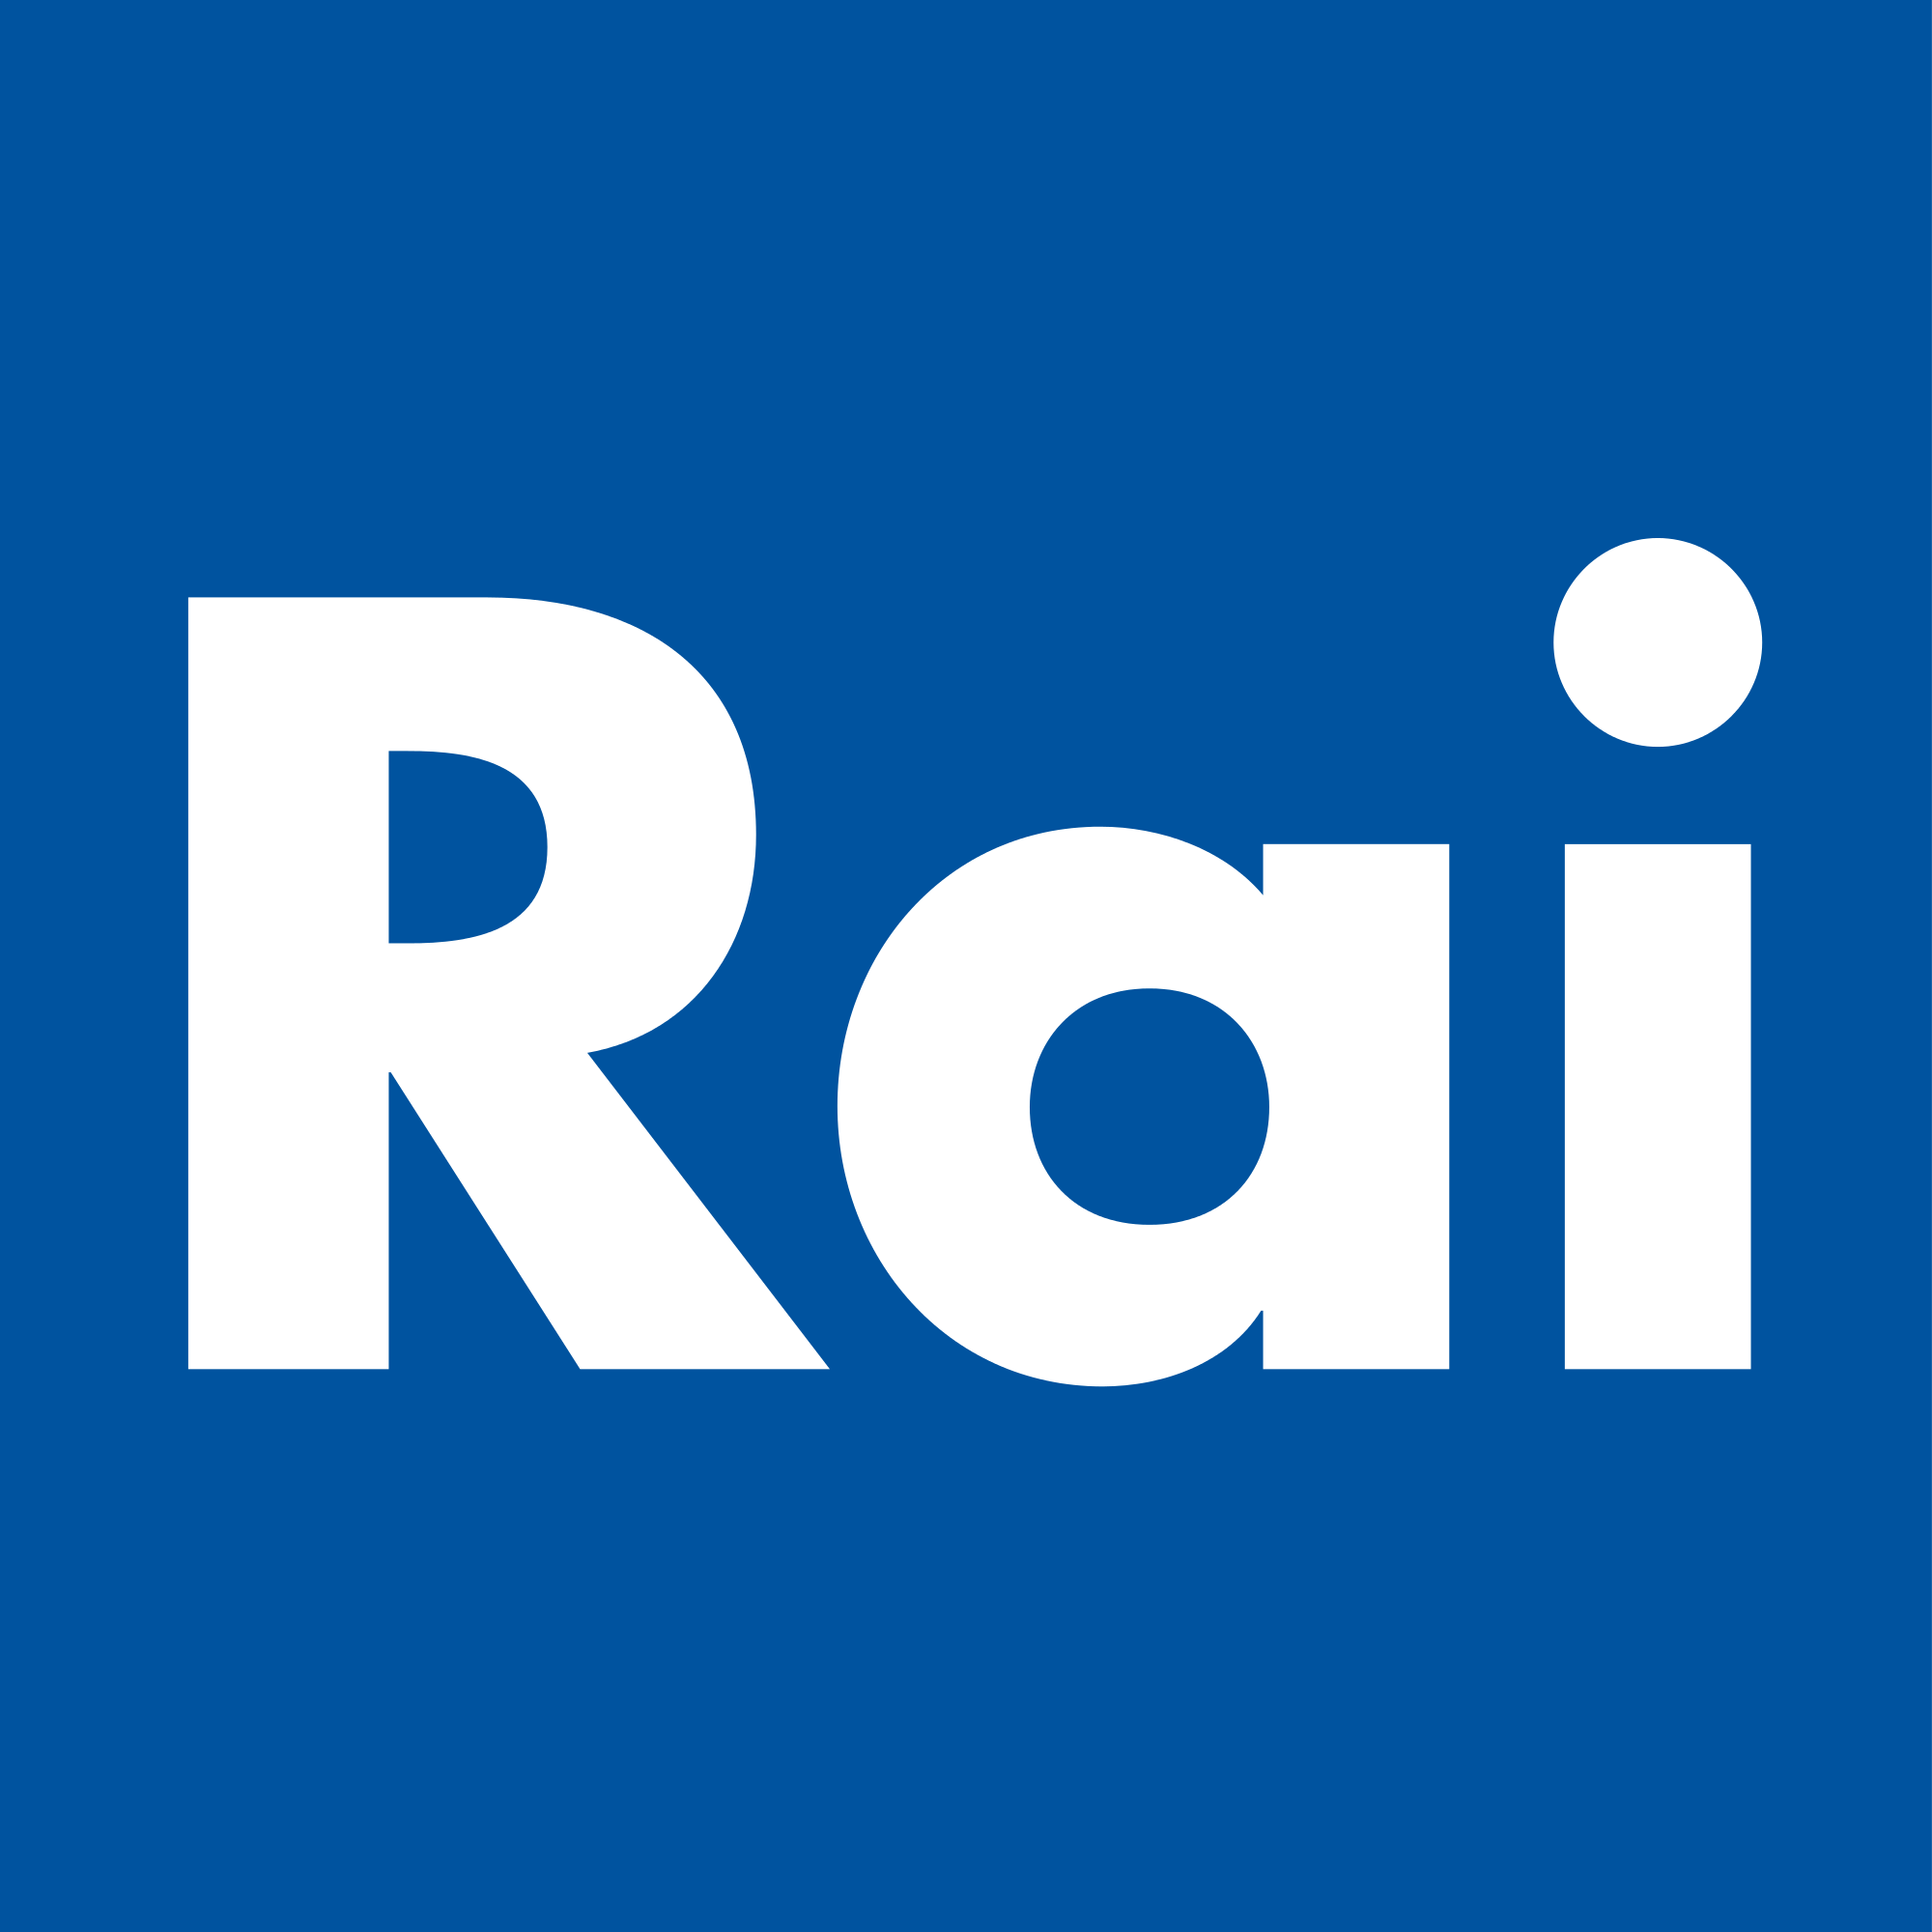 rai   radiotelevisione italiana logo svg